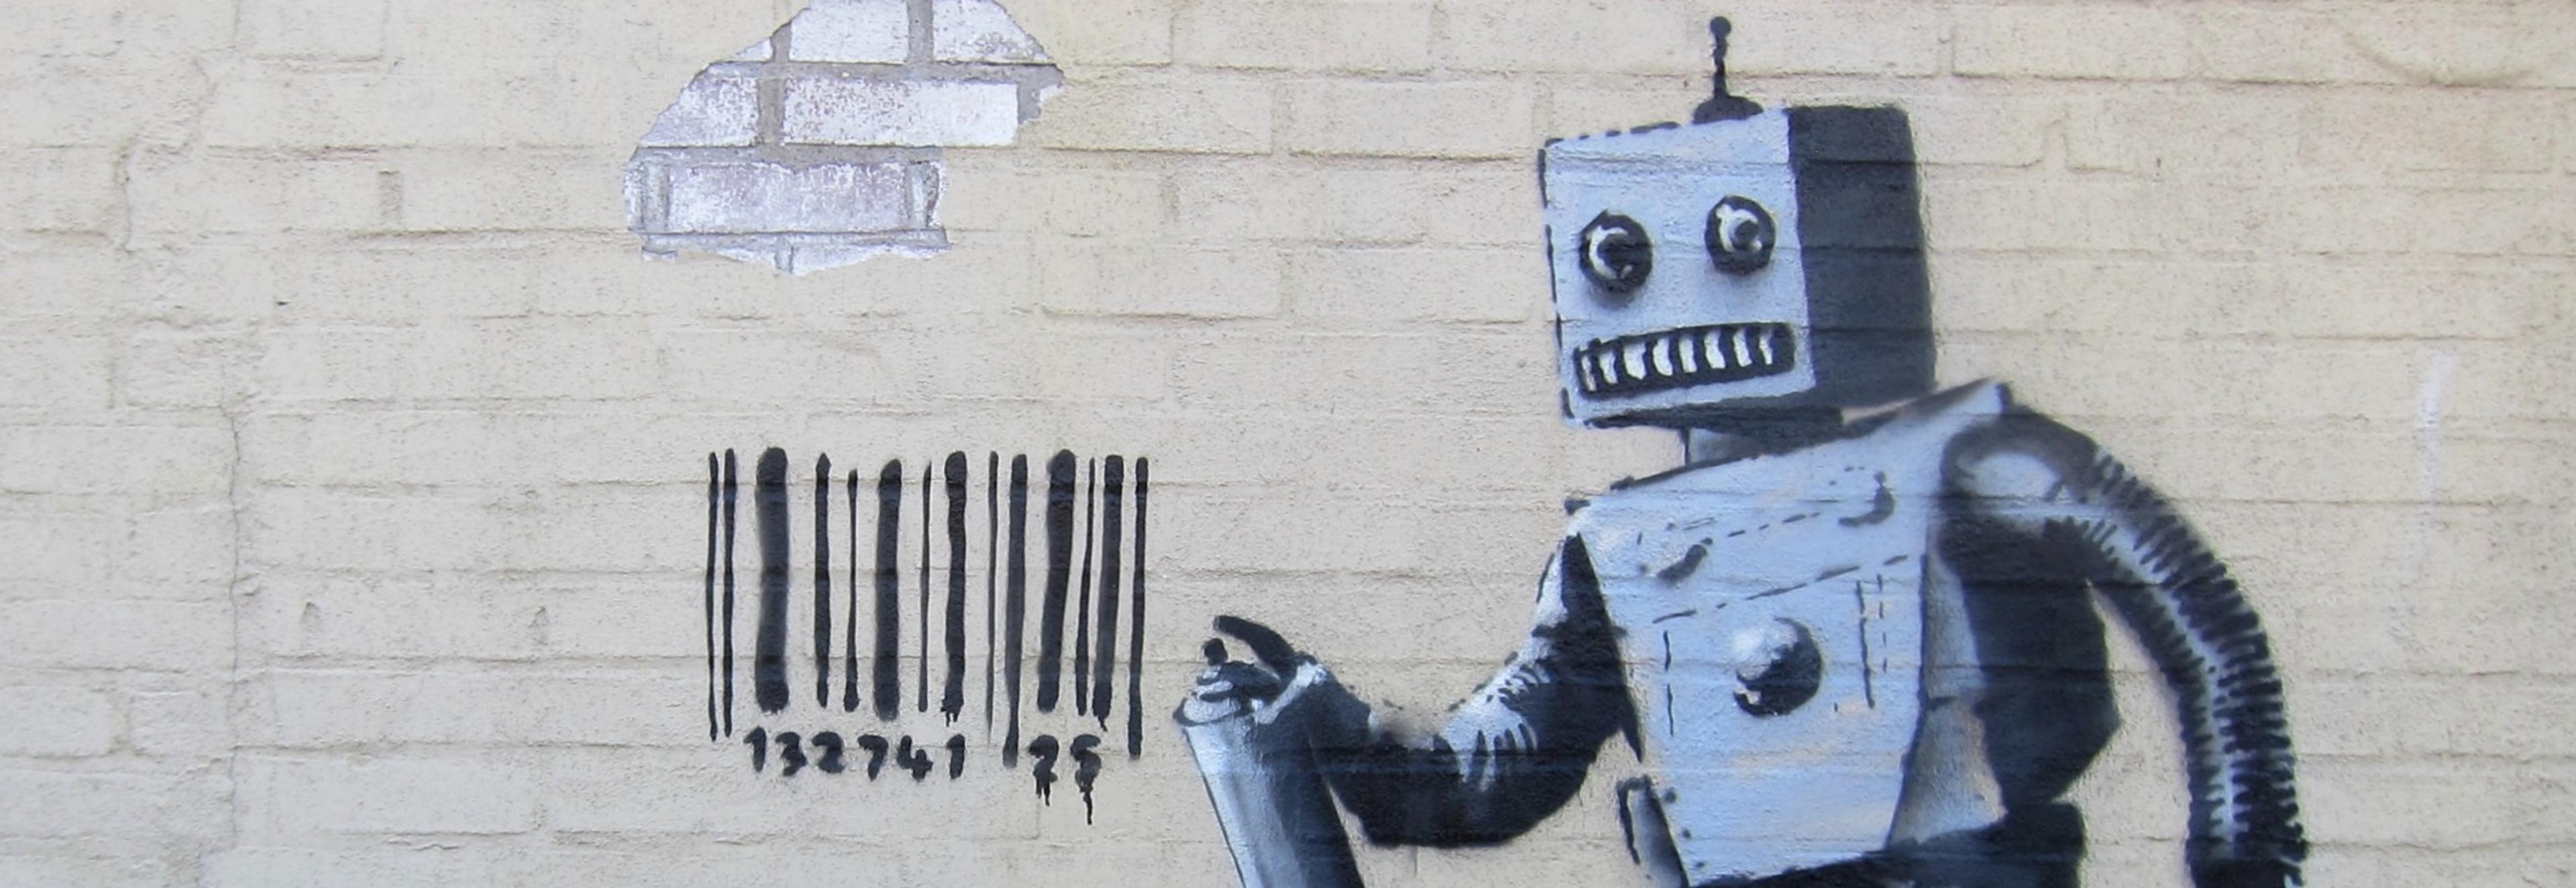 android graffiti